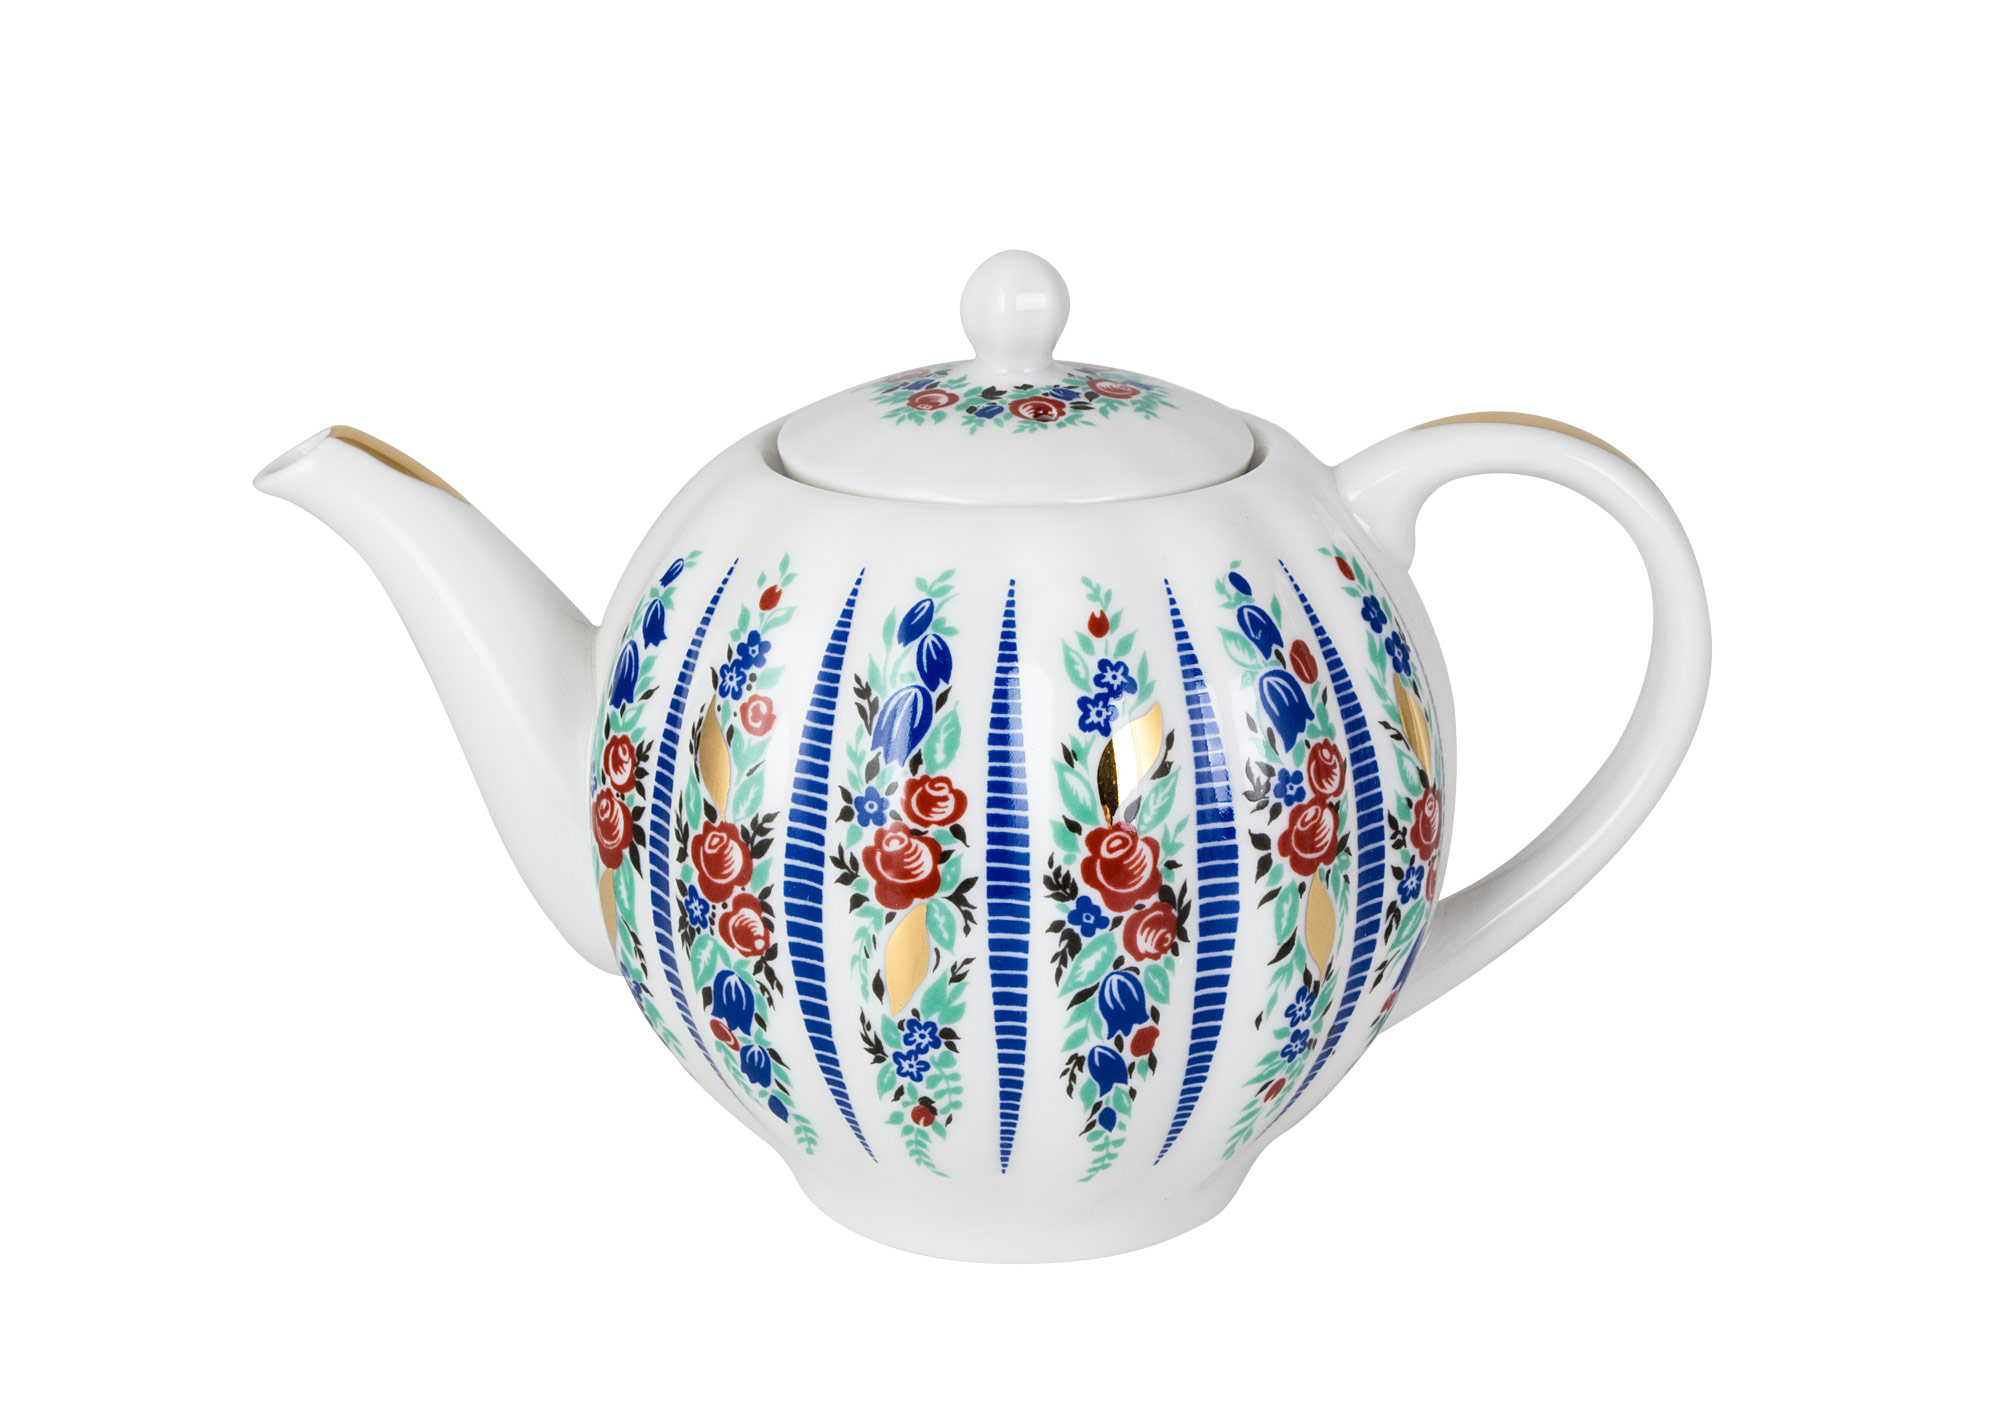 Buy Sarafan Russian Porcelain Teapot at GoldenCockerel.com